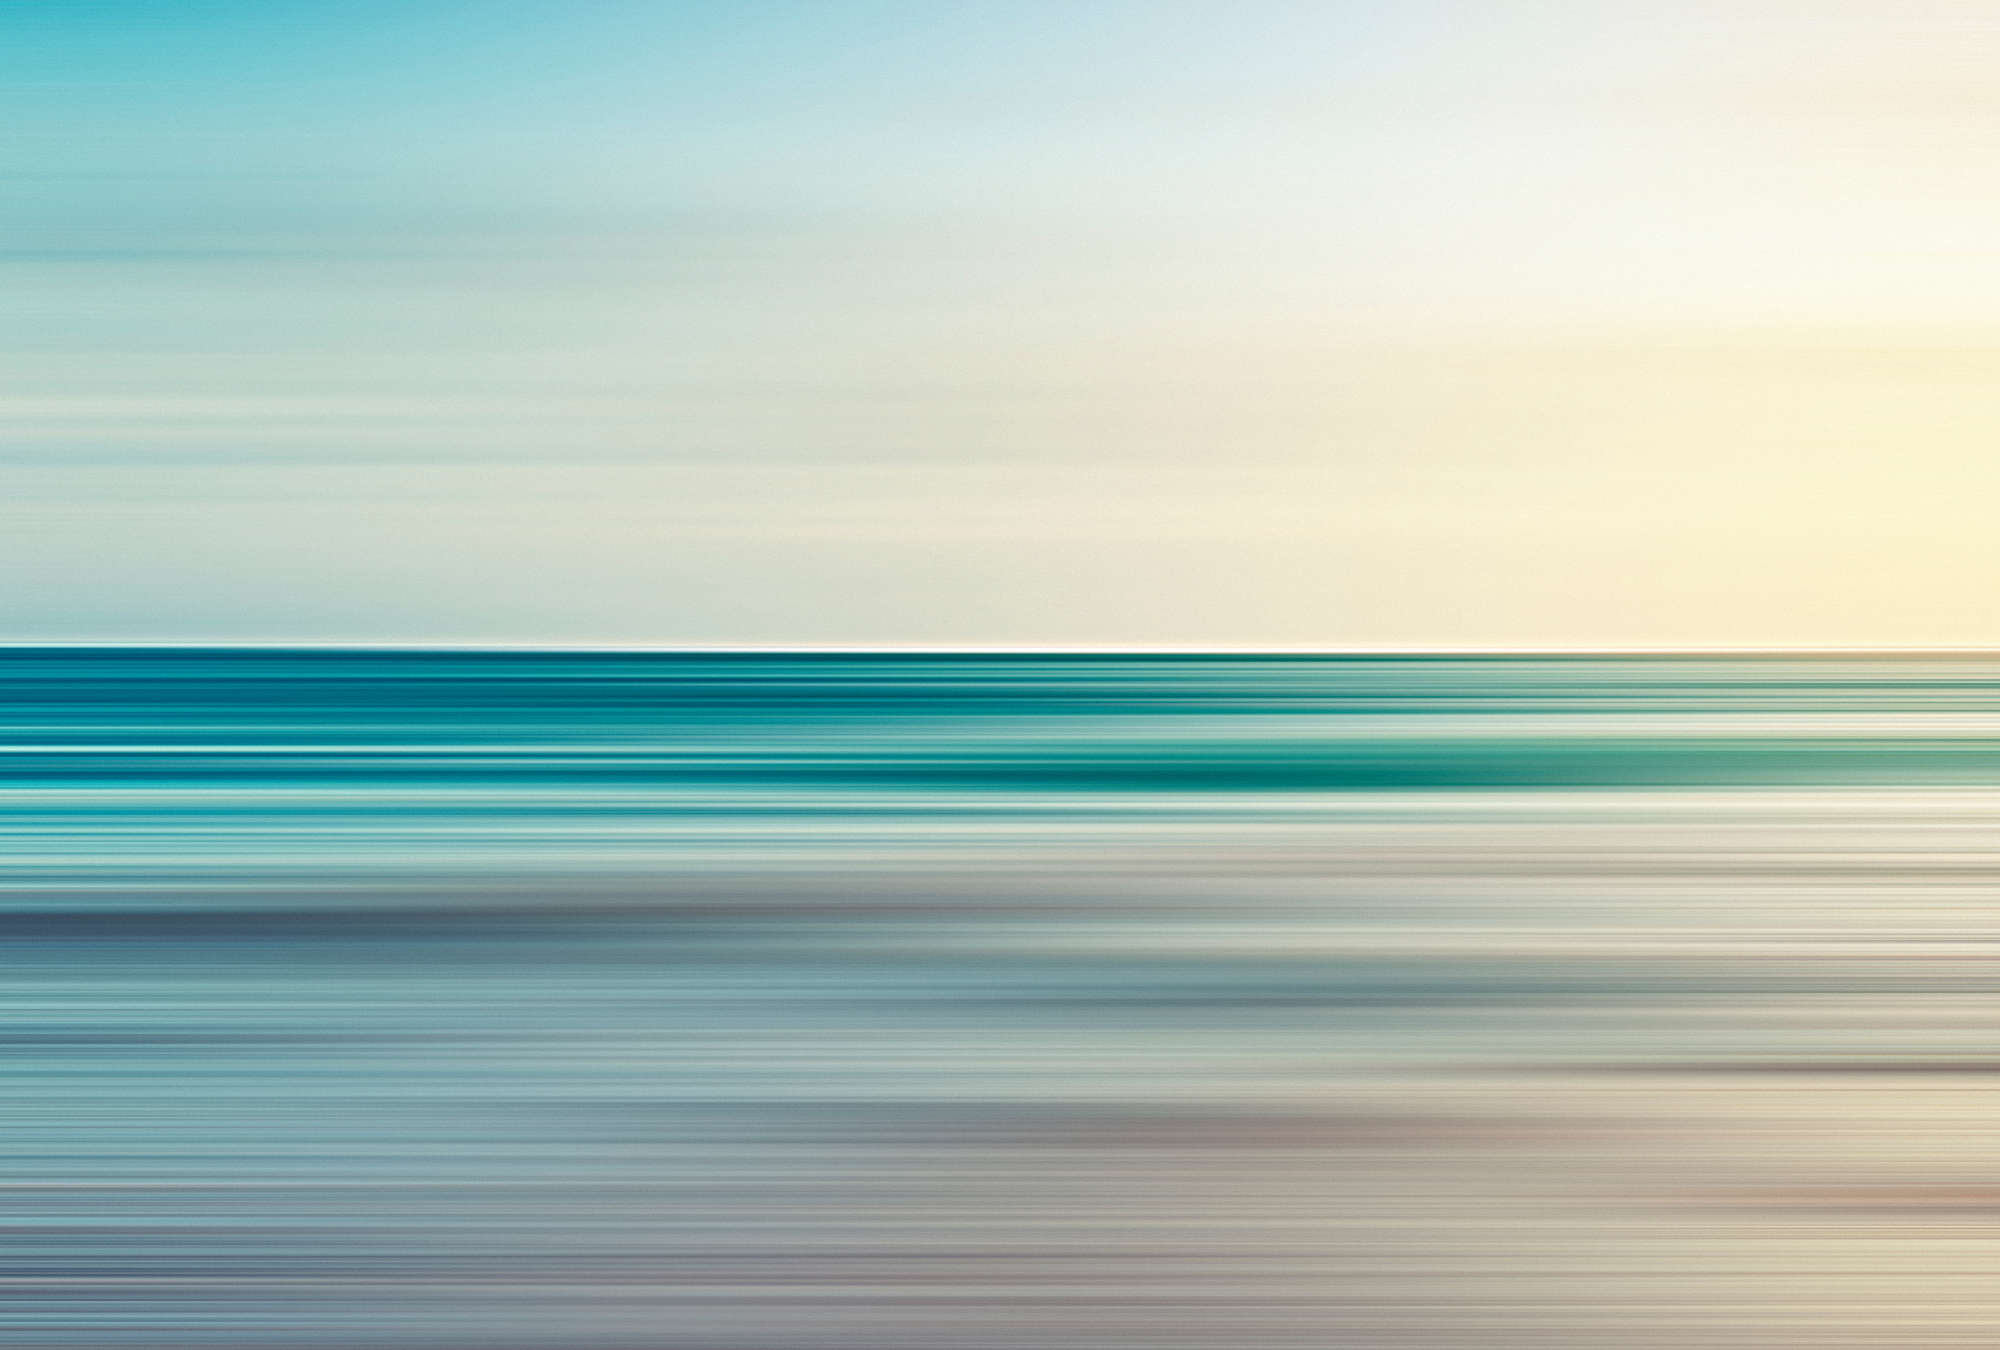             Horizon 1 – Fototapete abstrakte Landschaft in Blau
        